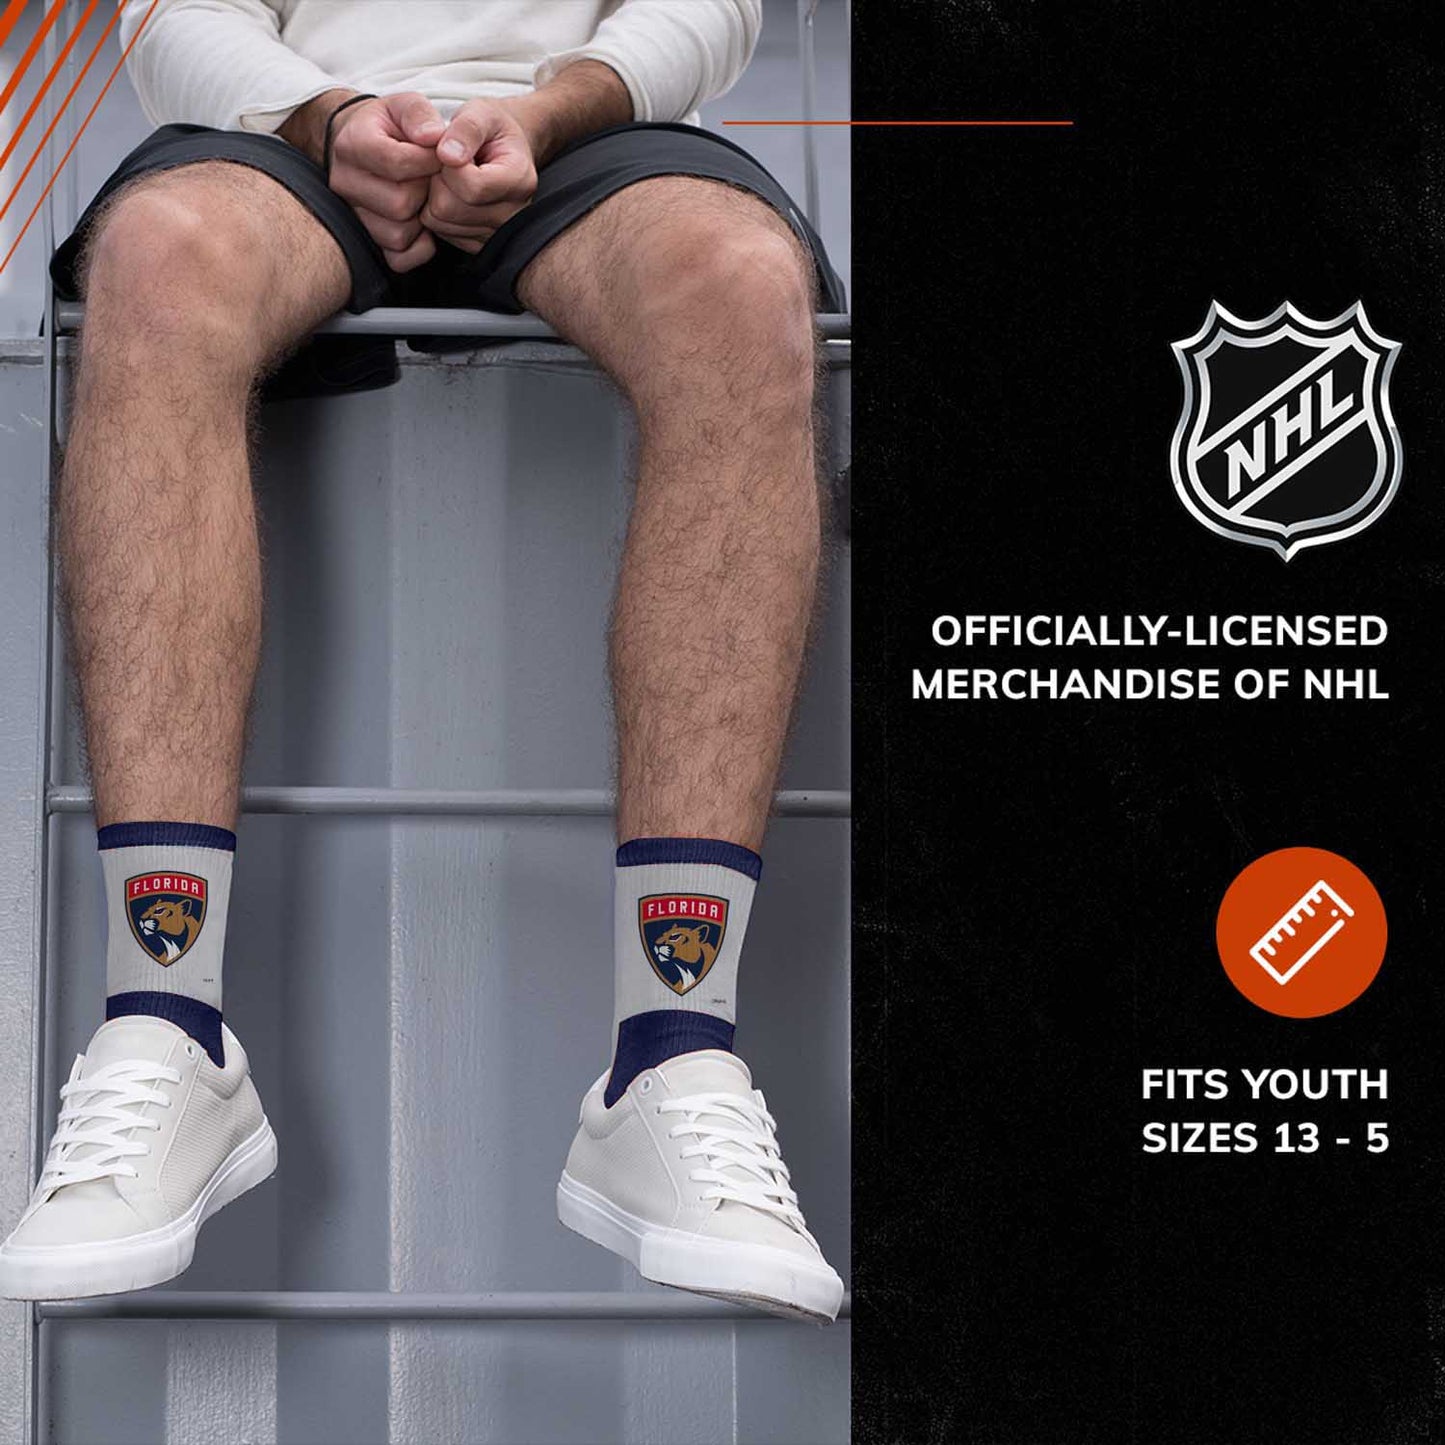 Florida Panthers NHL Youth Surge Socks - Navy